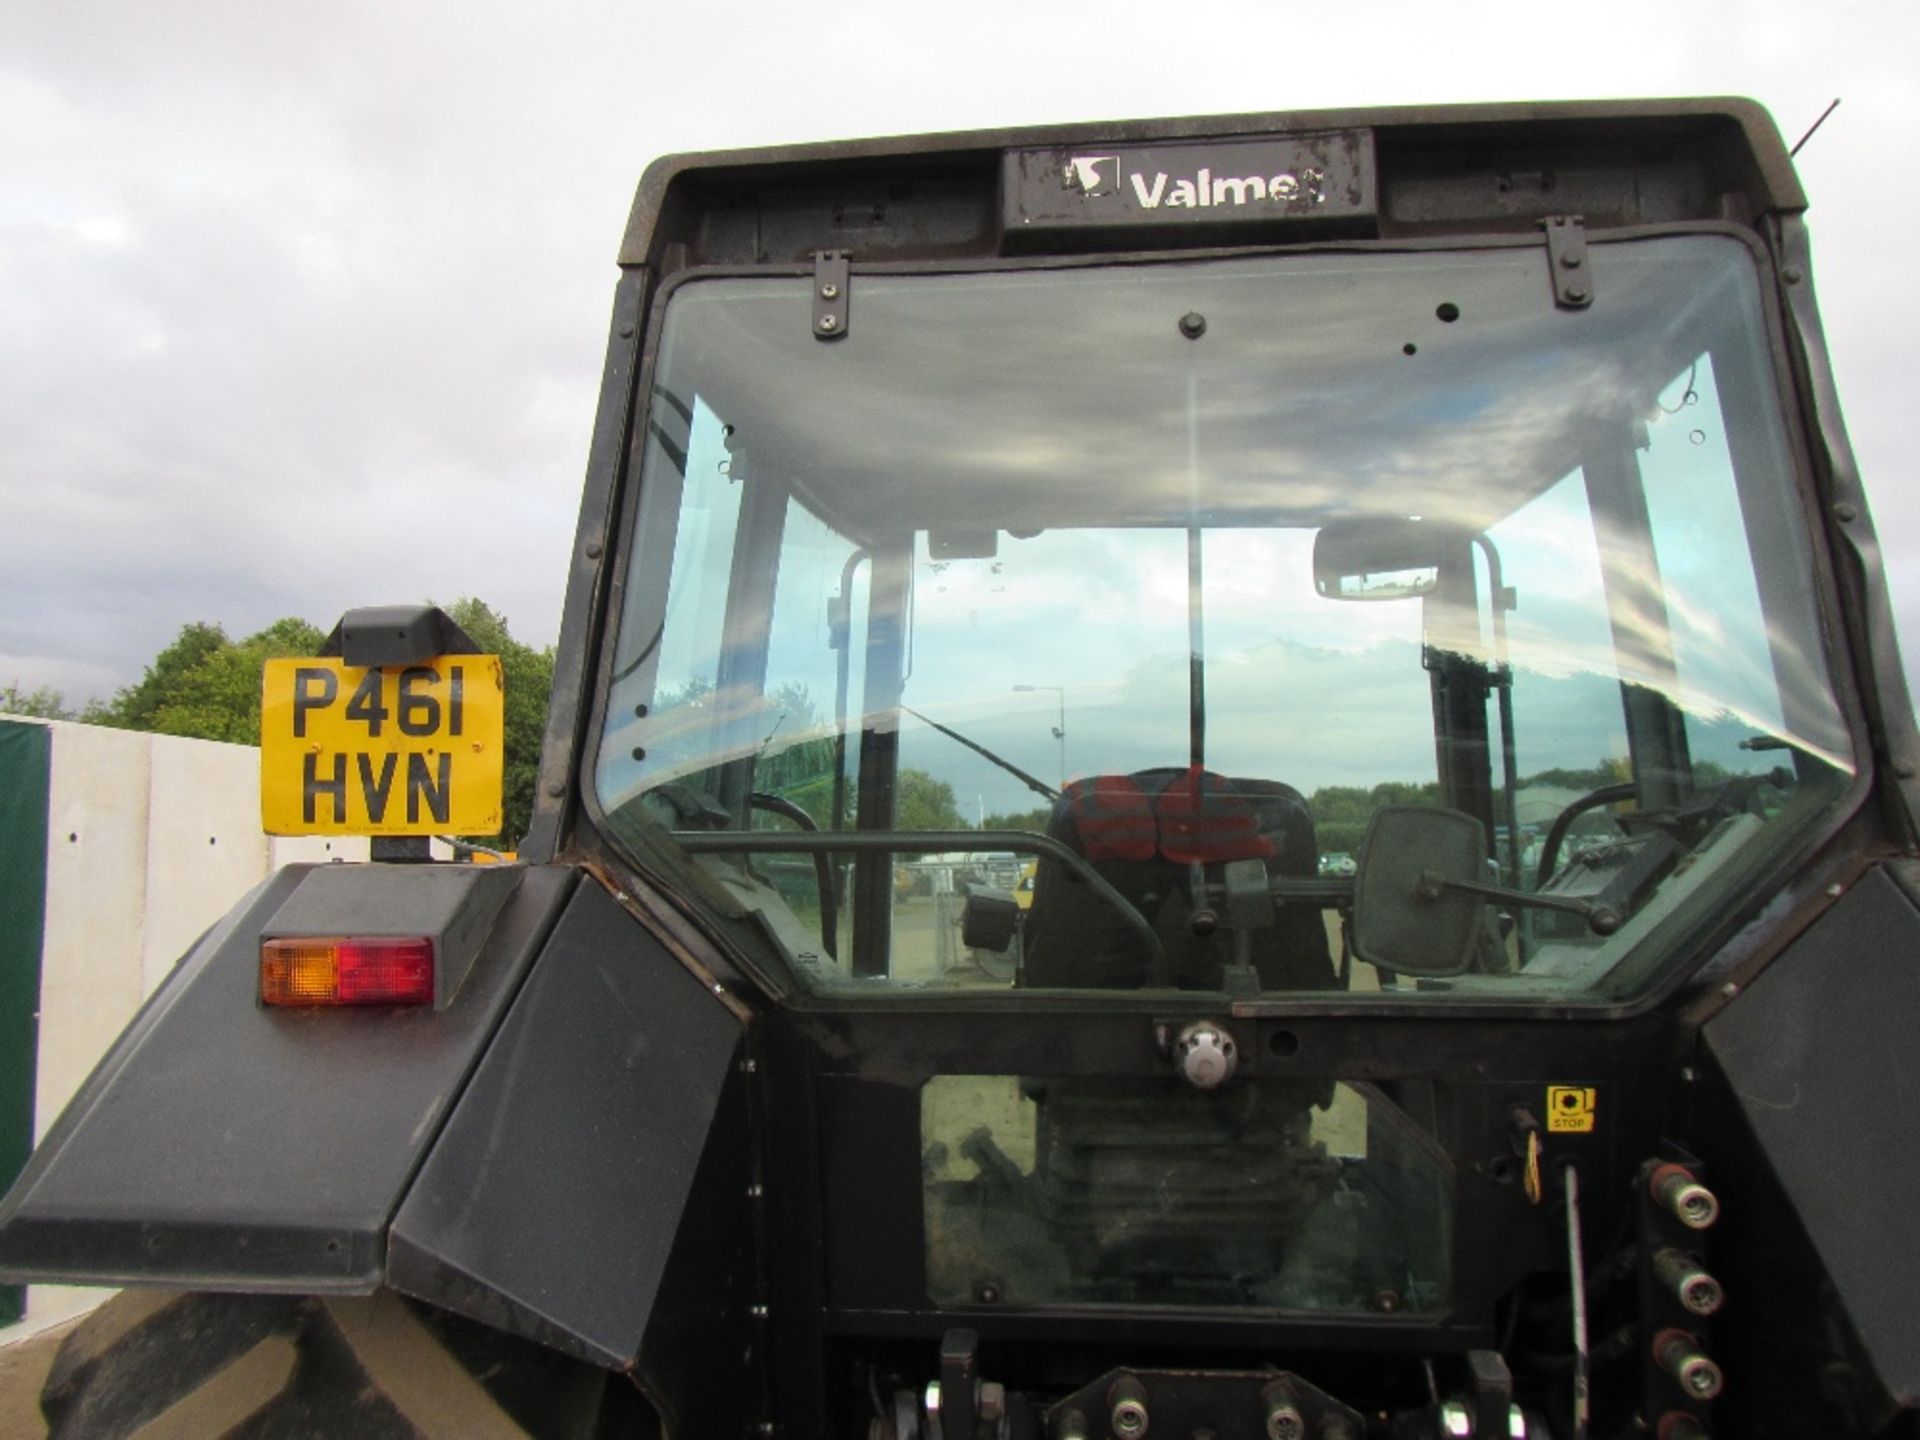 Valtra 8450 4wd 150hp Tractor Reg. No. P461 HVN Ser No G07329 - Image 8 of 16